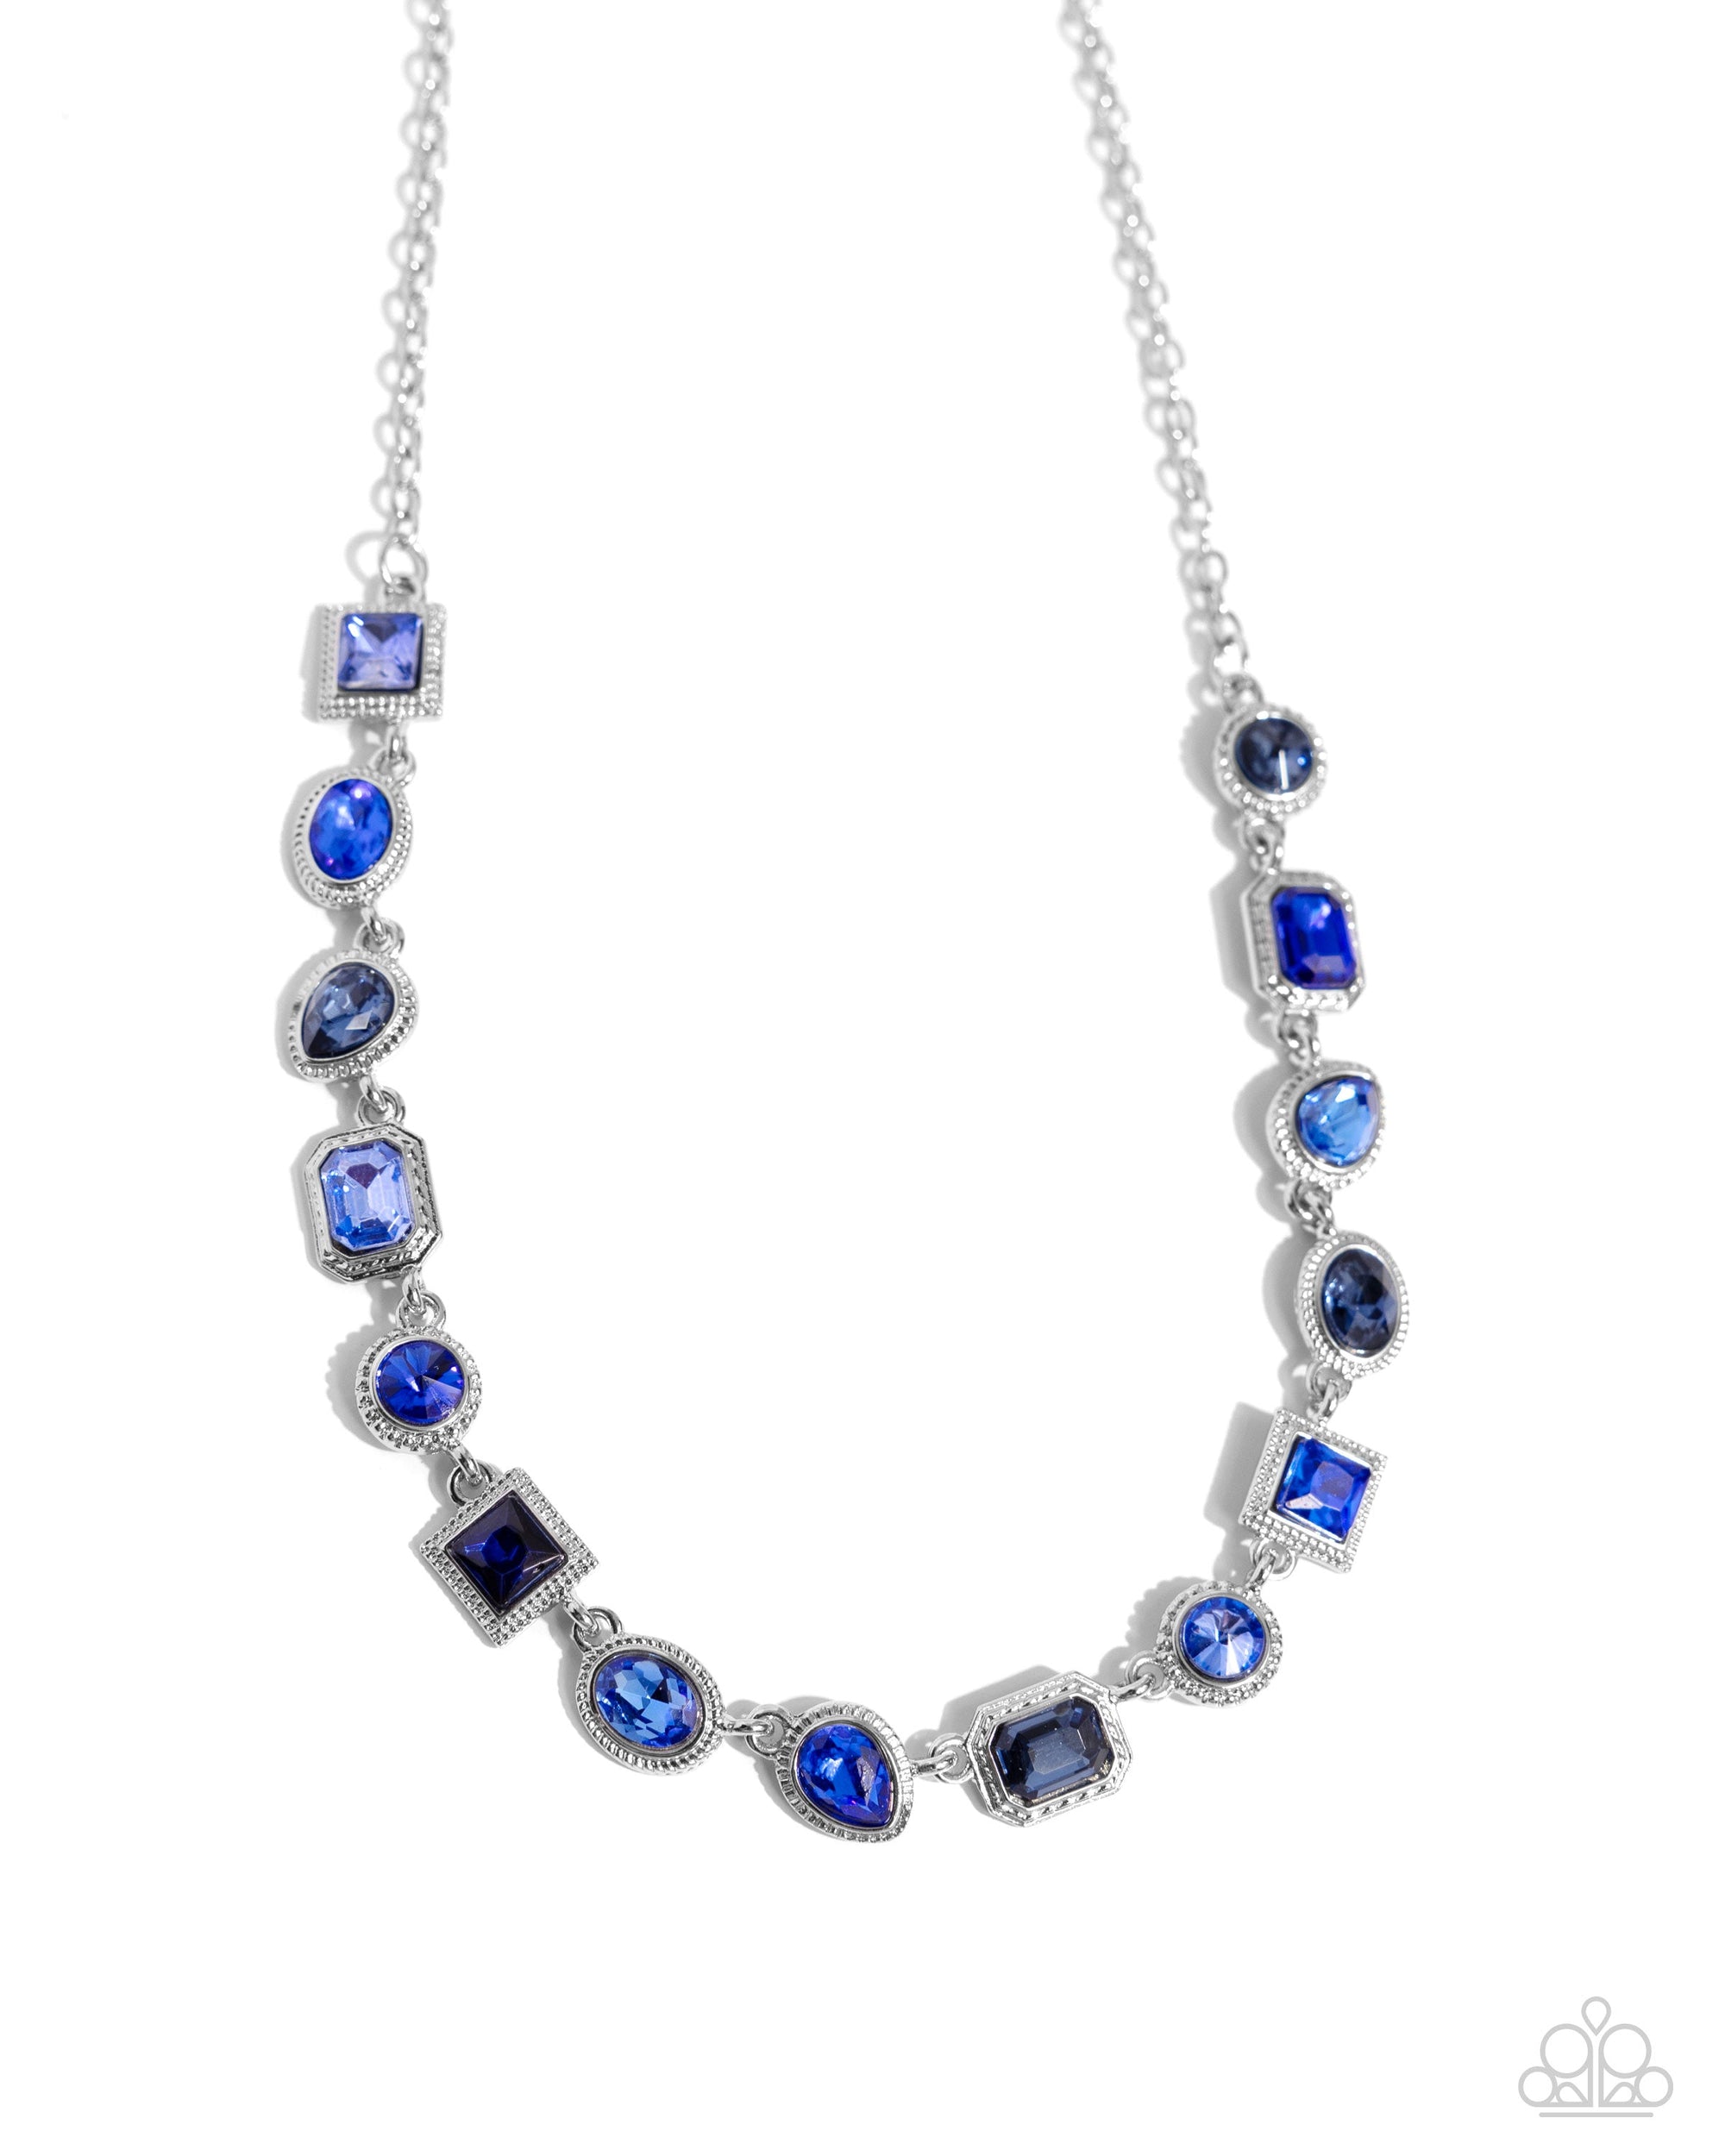 Gallery Glam Blue Rhinestone Necklace - Paparazzi Accessories- lightbox - CarasShop.com - $5 Jewelry by Cara Jewels